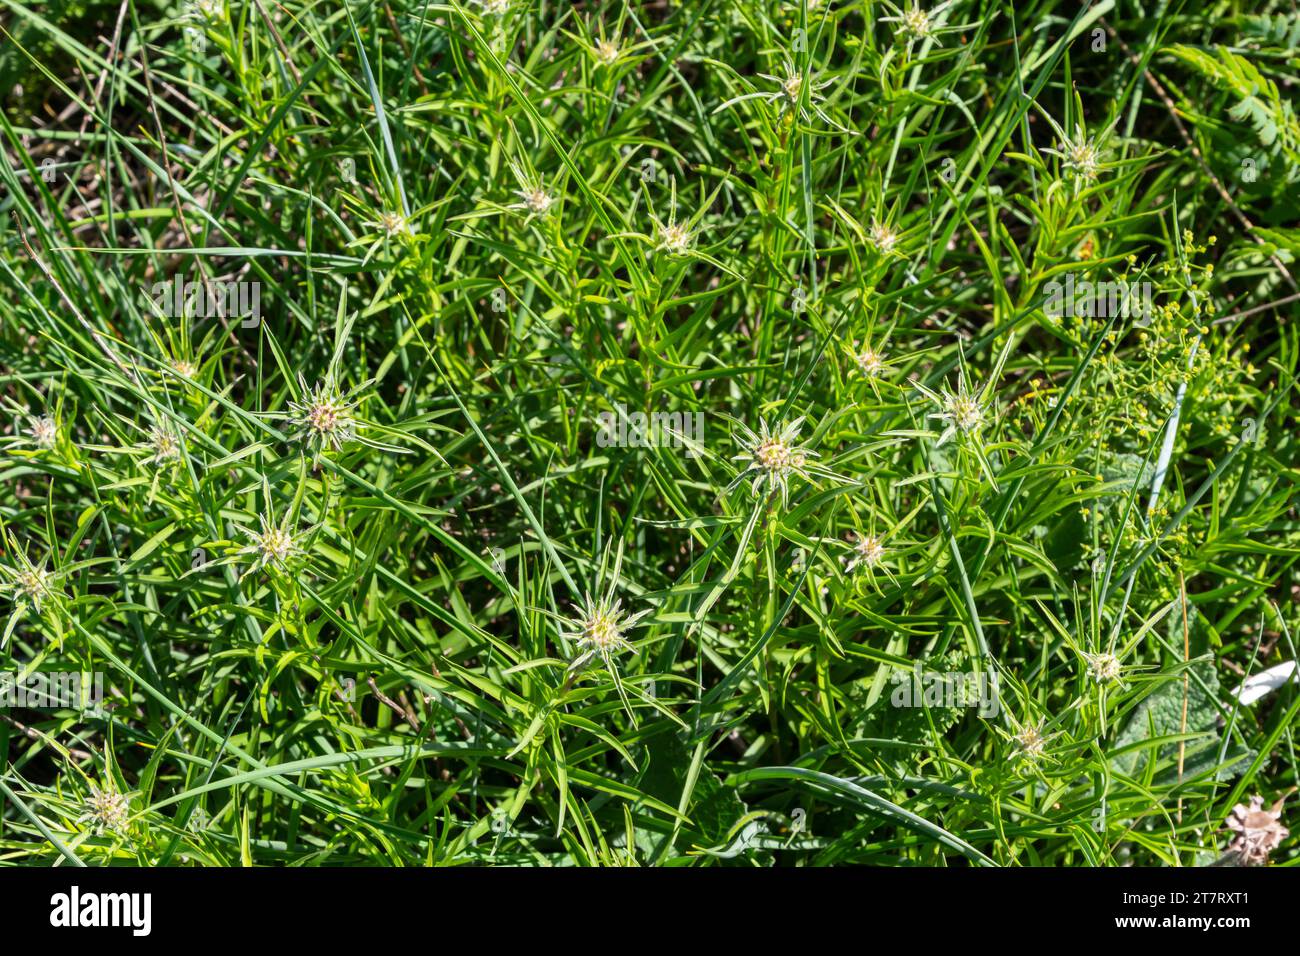 Carlina biebersteinii plant at field at nature. Carlina vulgaris or Carline thistle, family Asteraceae Compositae. Carlina corymbosa. Stock Photo